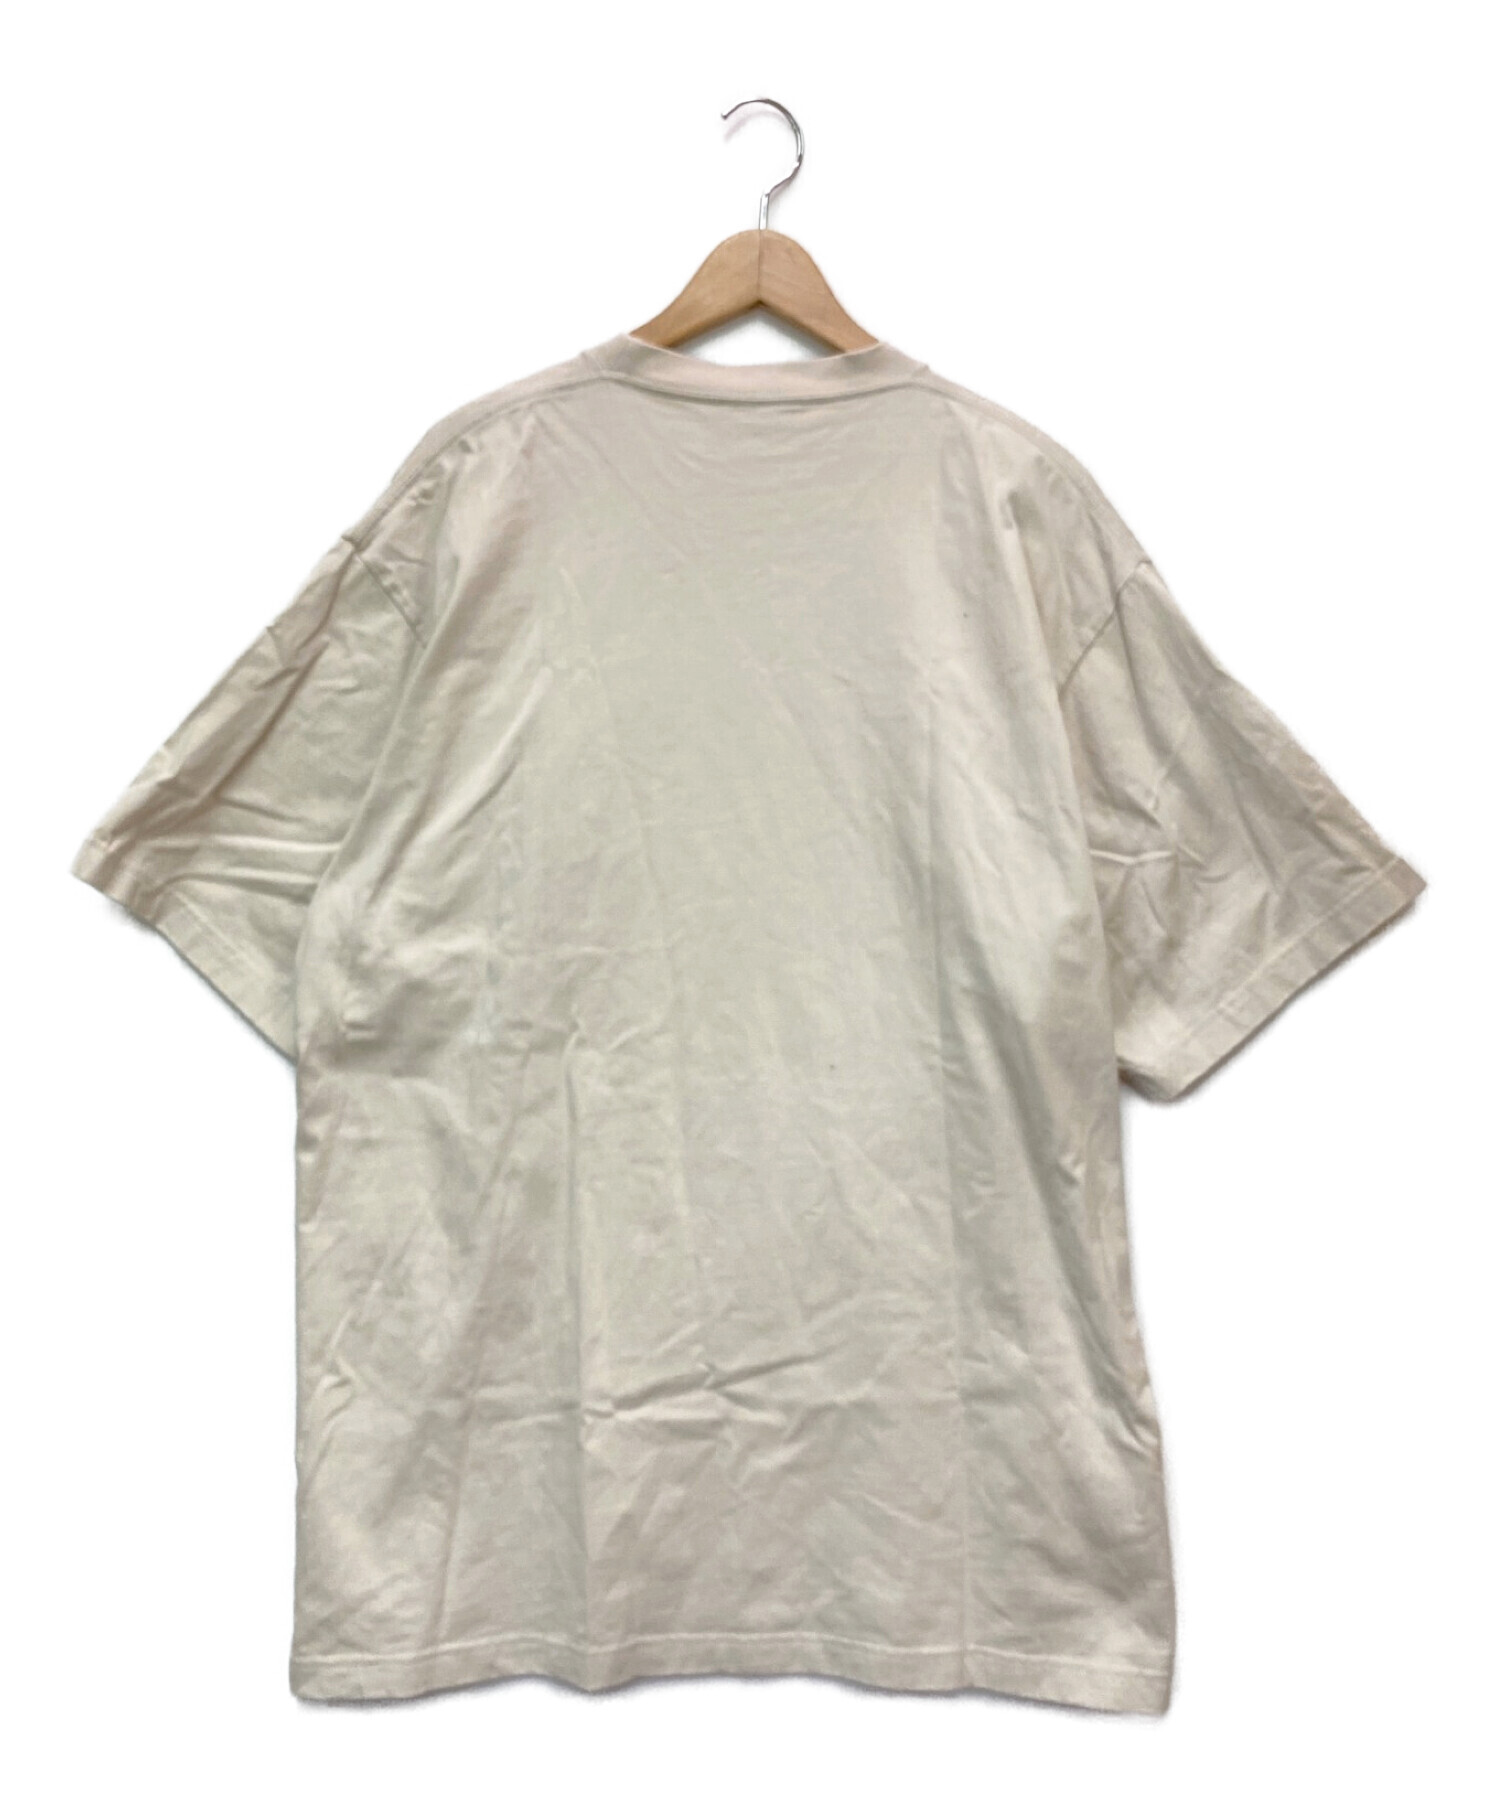 BALENCIAGA (バレンシアガ) ファッションウィークフラットグラウンドTシャツ ベージュ サイズ:XS